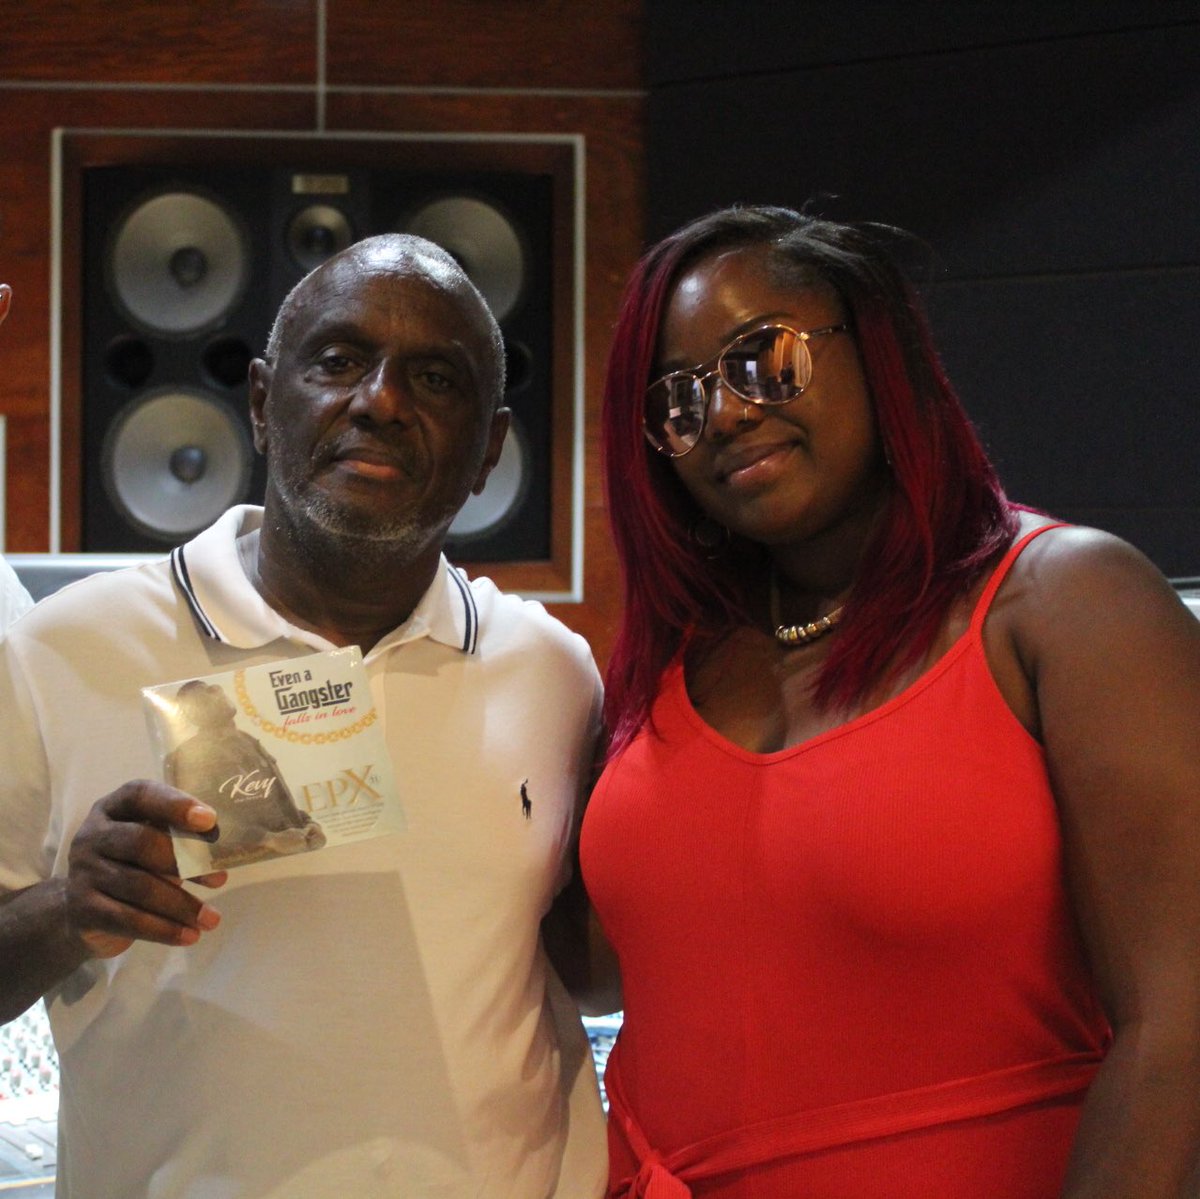 Chemina winner of @JaminVoiceofJA in the studio with legendary producer #GussieClarke. Catch her on the @JCDCJamaica #MelloGoRound stage during independence @uk_Jamin @gracefoods @ReggaeBrit @punchrecords @caribbeanfoodwk @VMBS_UK